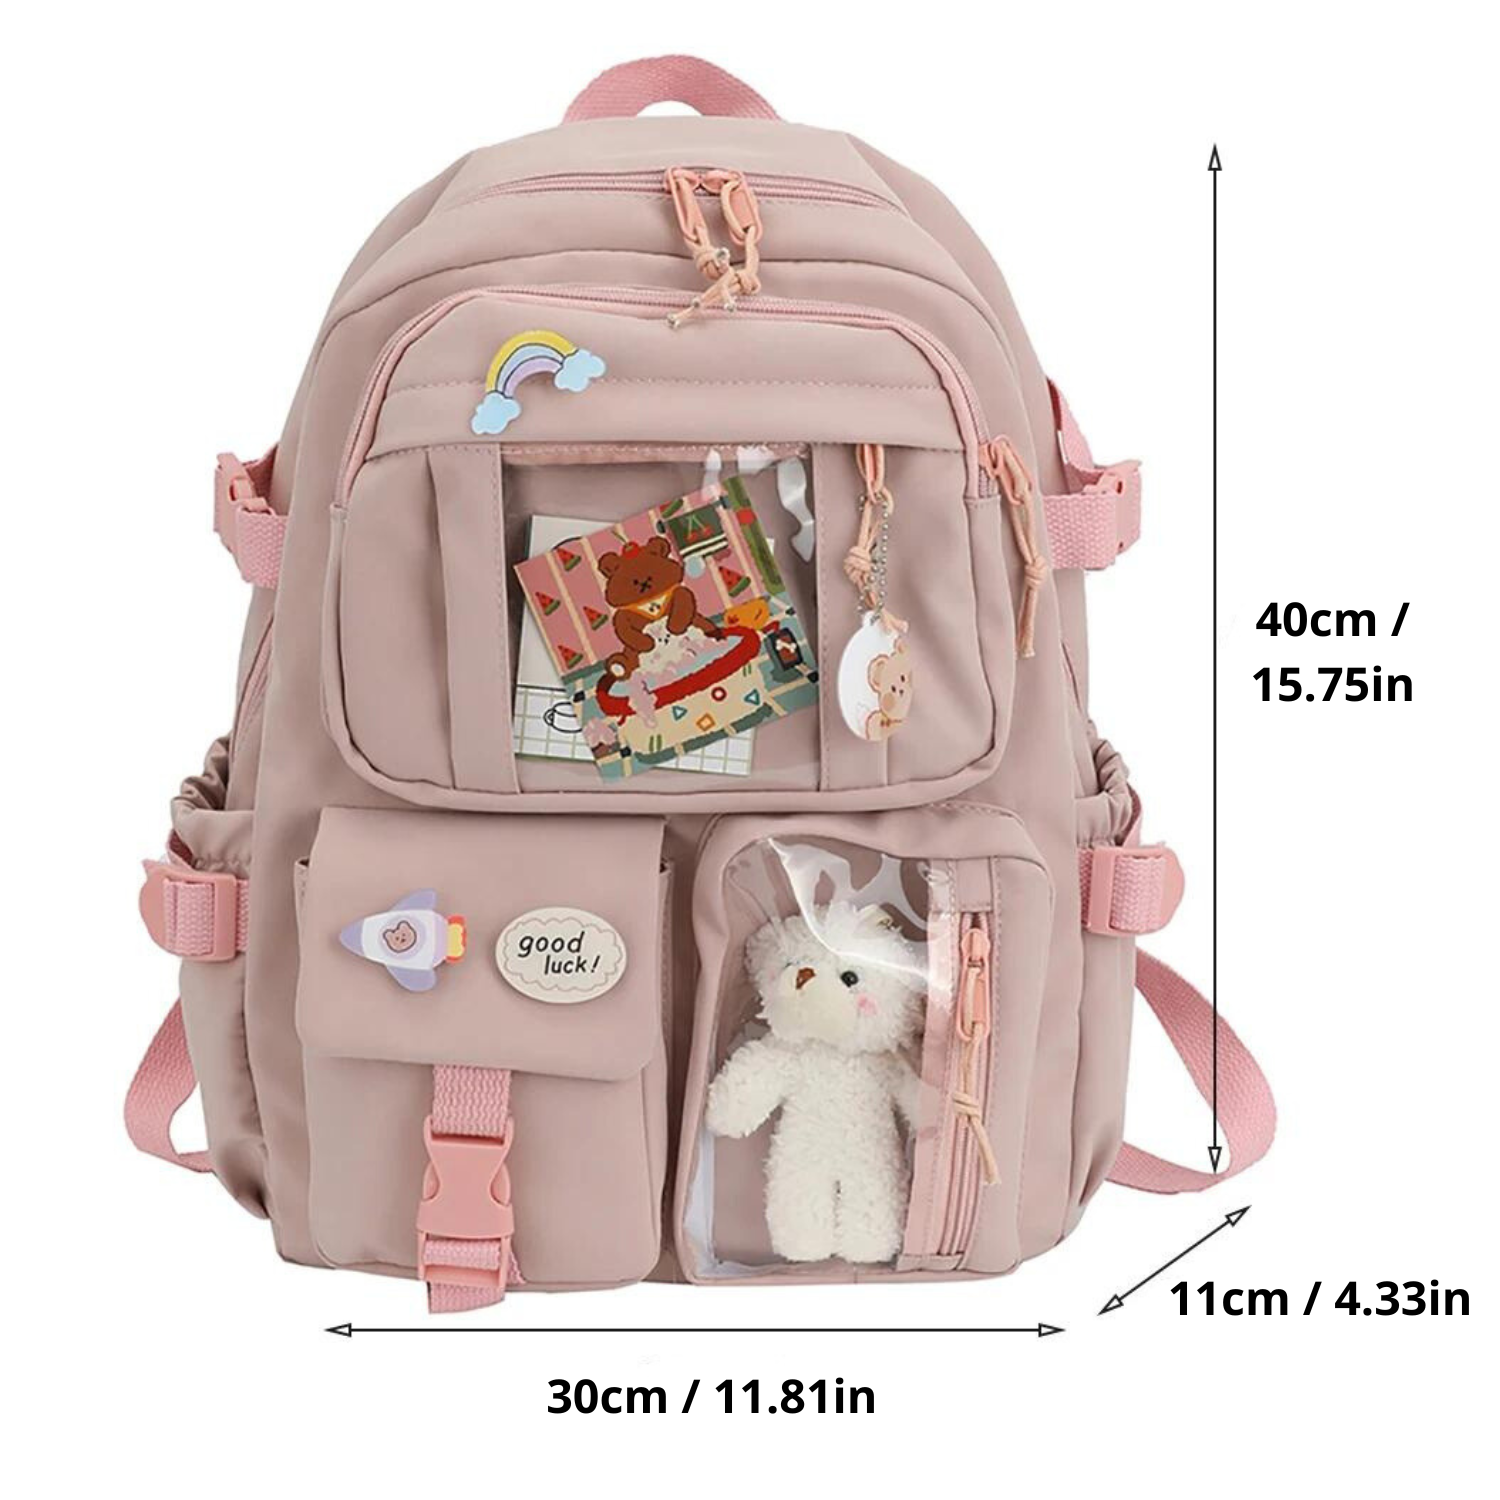 Chic Kawaii-Inspired Multipurpose Backpack